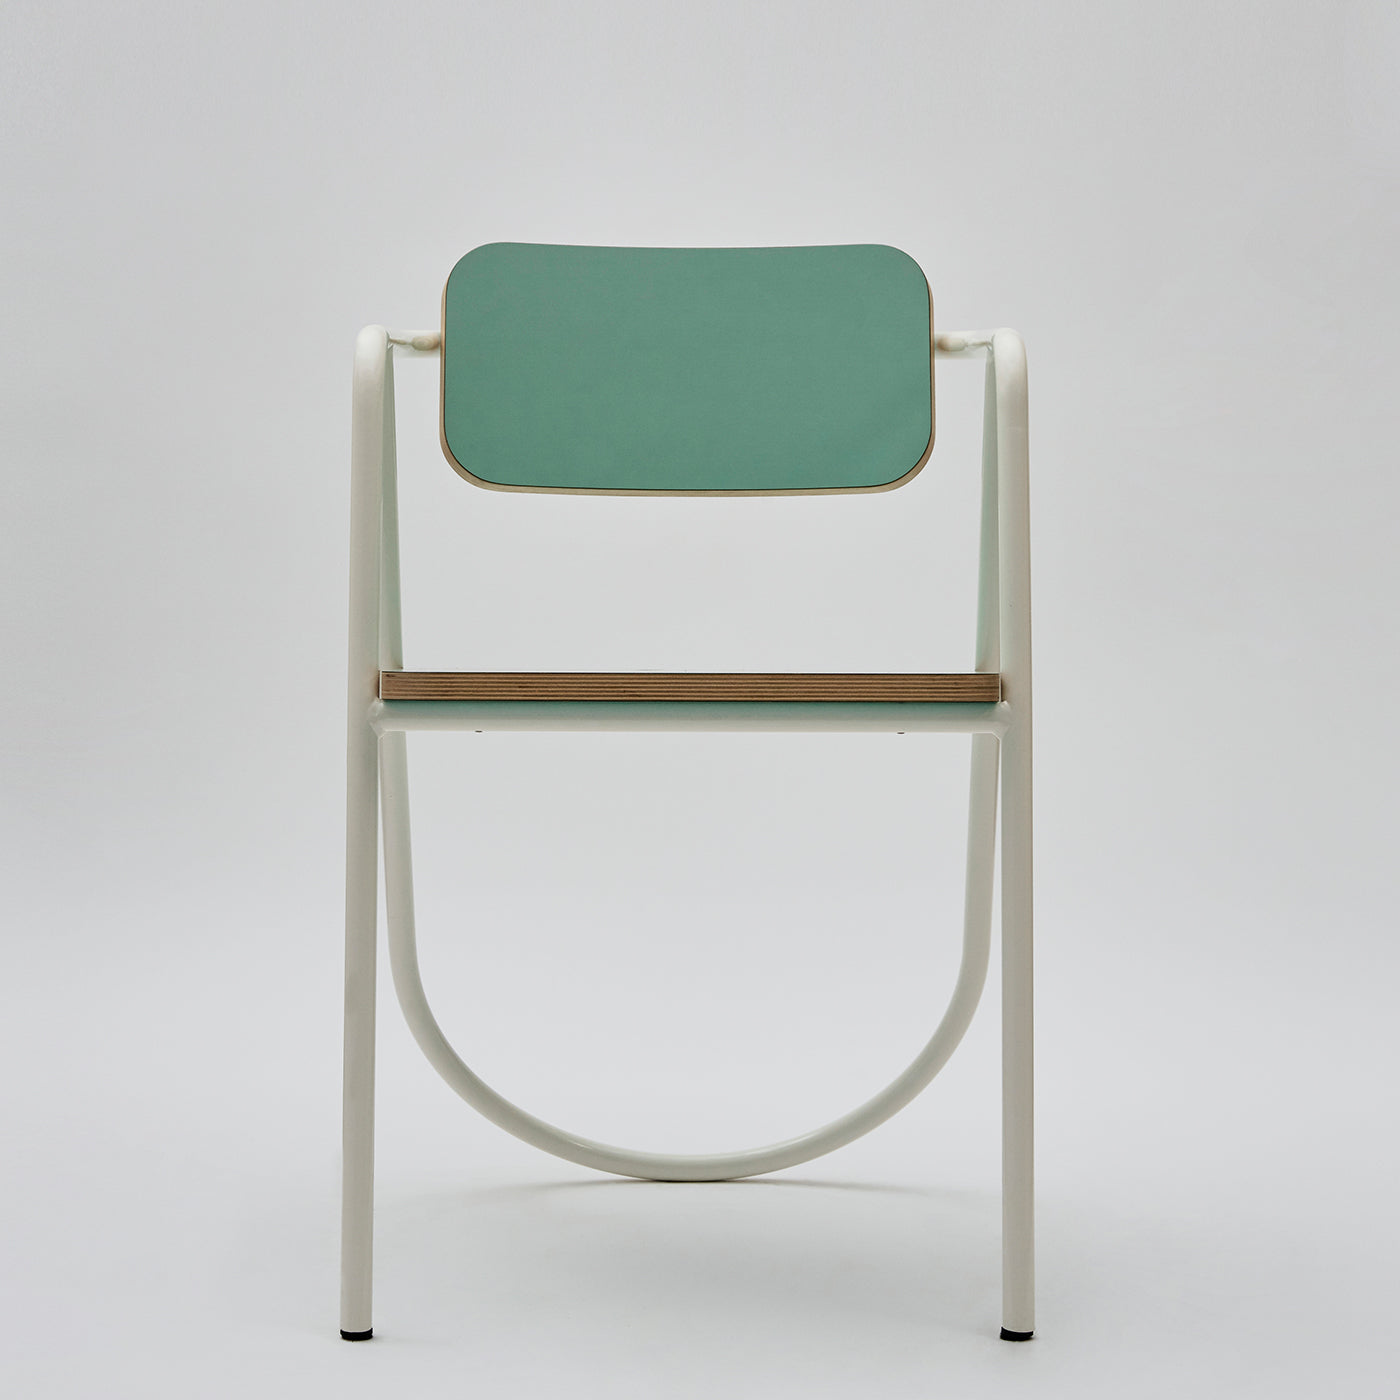 La Misciù White & Teal Chair - Alternative view 1